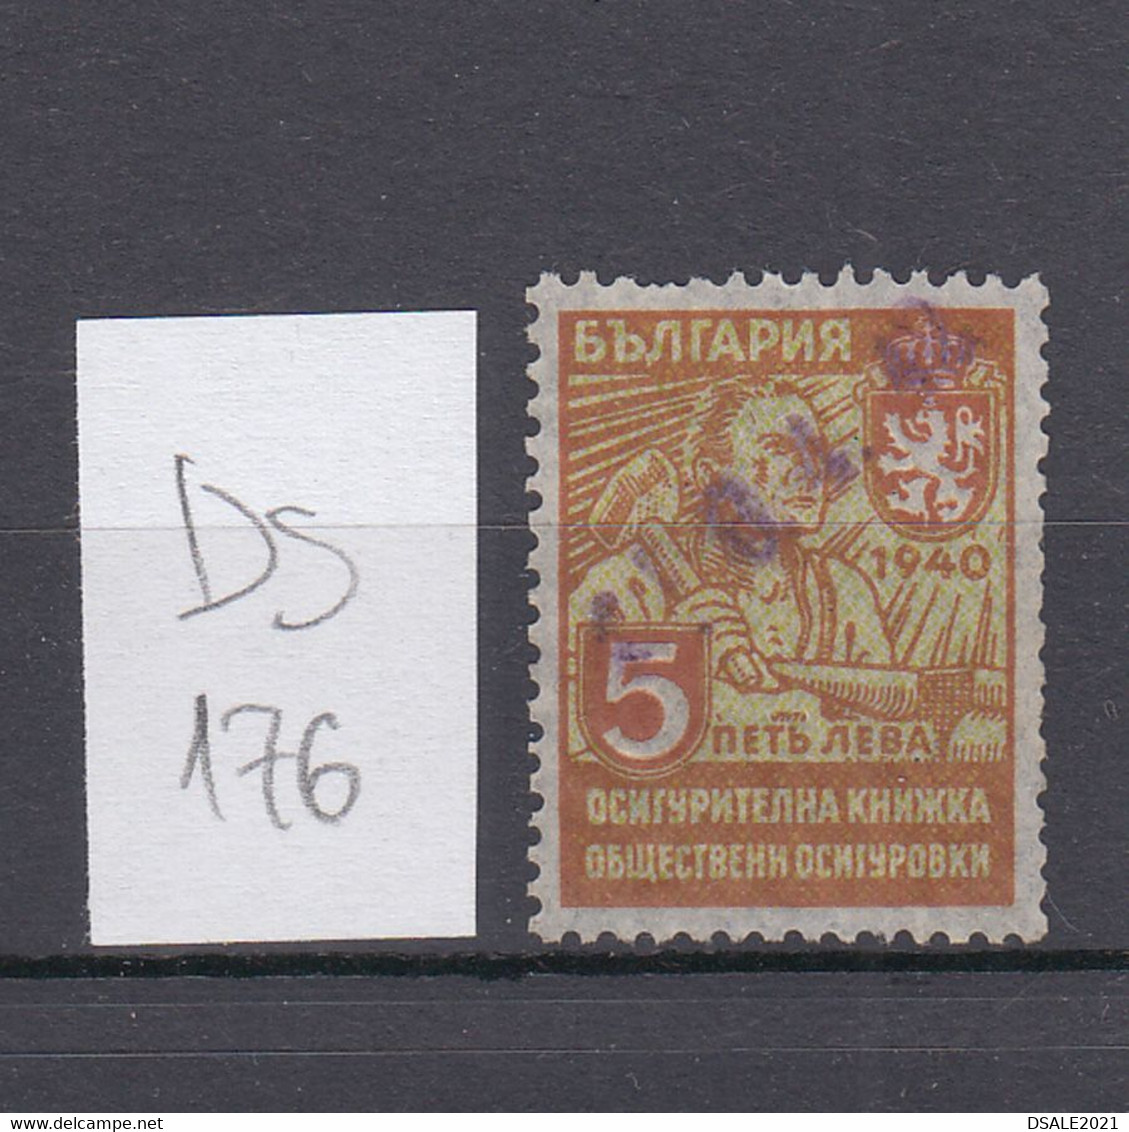 Bulgaria Bulgarie Bulgarije 1940 Social Insurance 5Lv. Stamp Fiscal Revenue Bulgarian (ds176) - Official Stamps